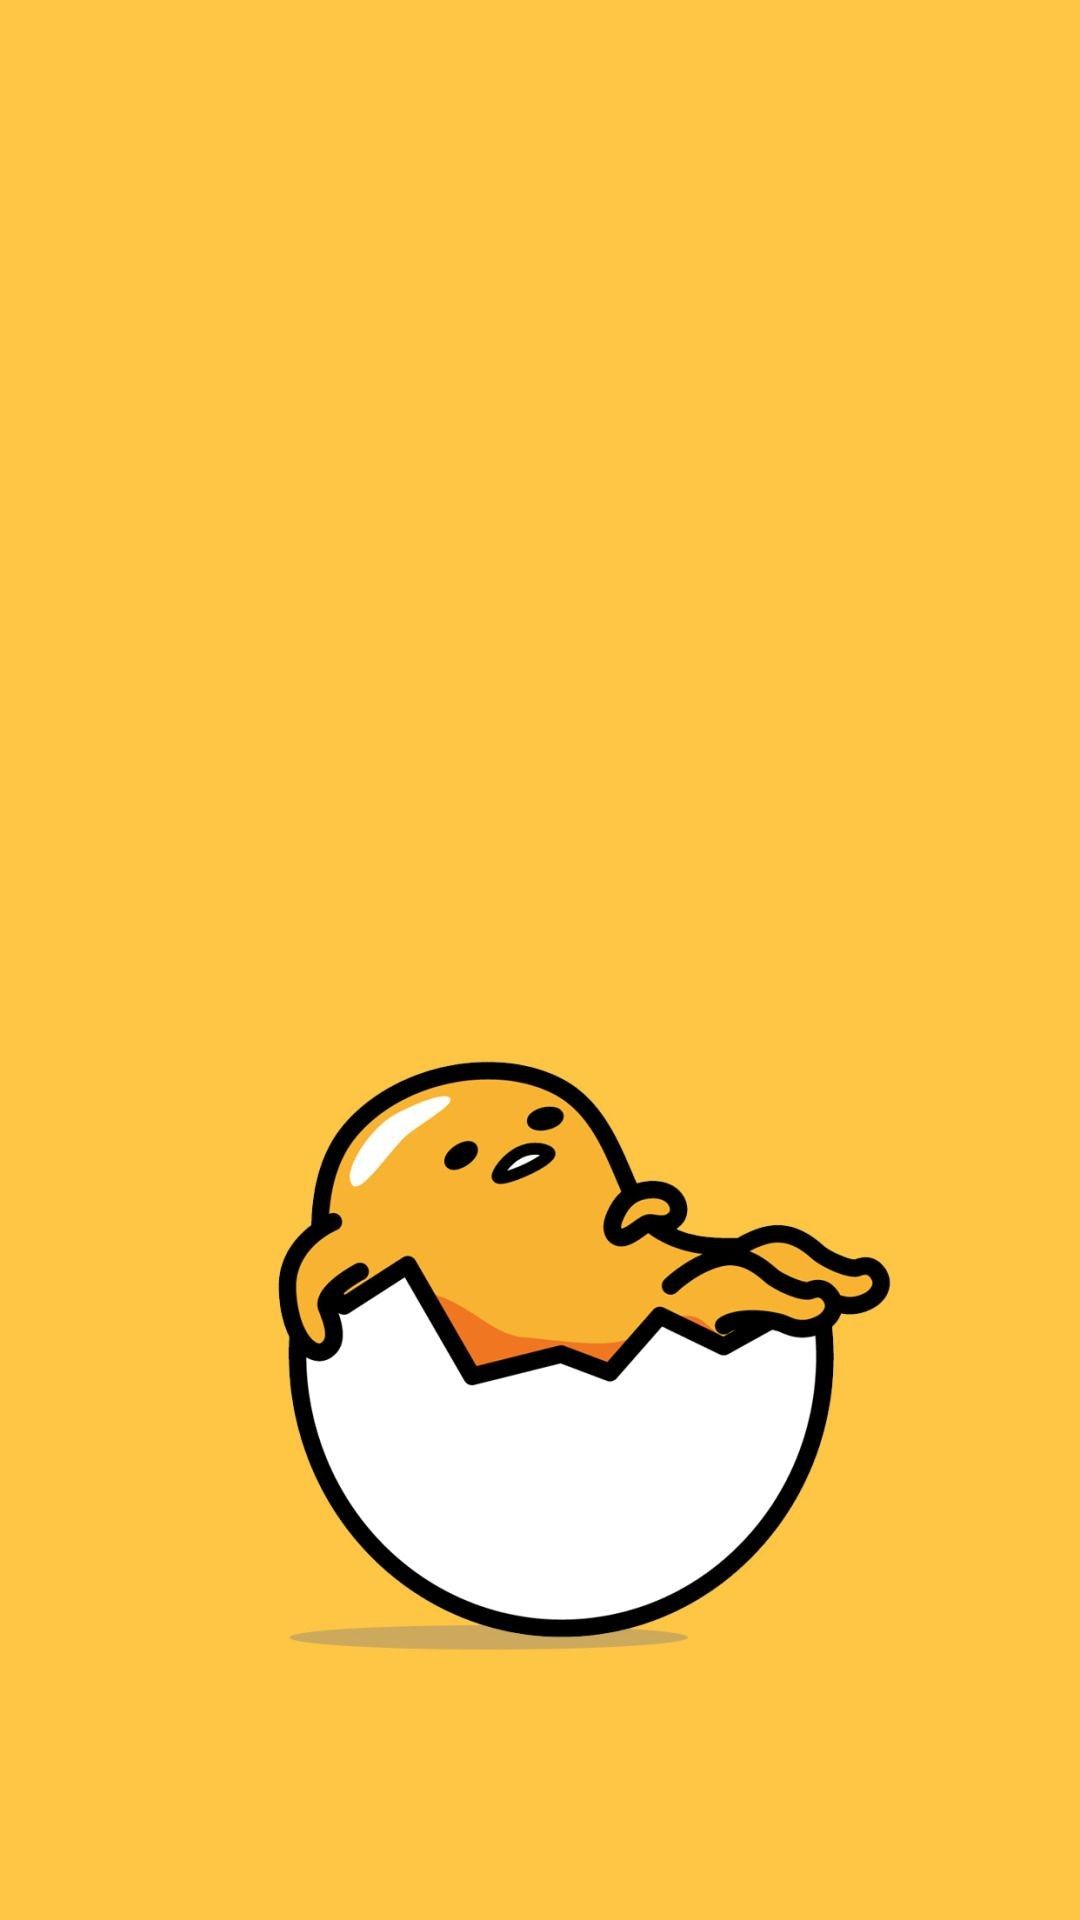 A cute cartoon chick sitting in an egg - Gudetama